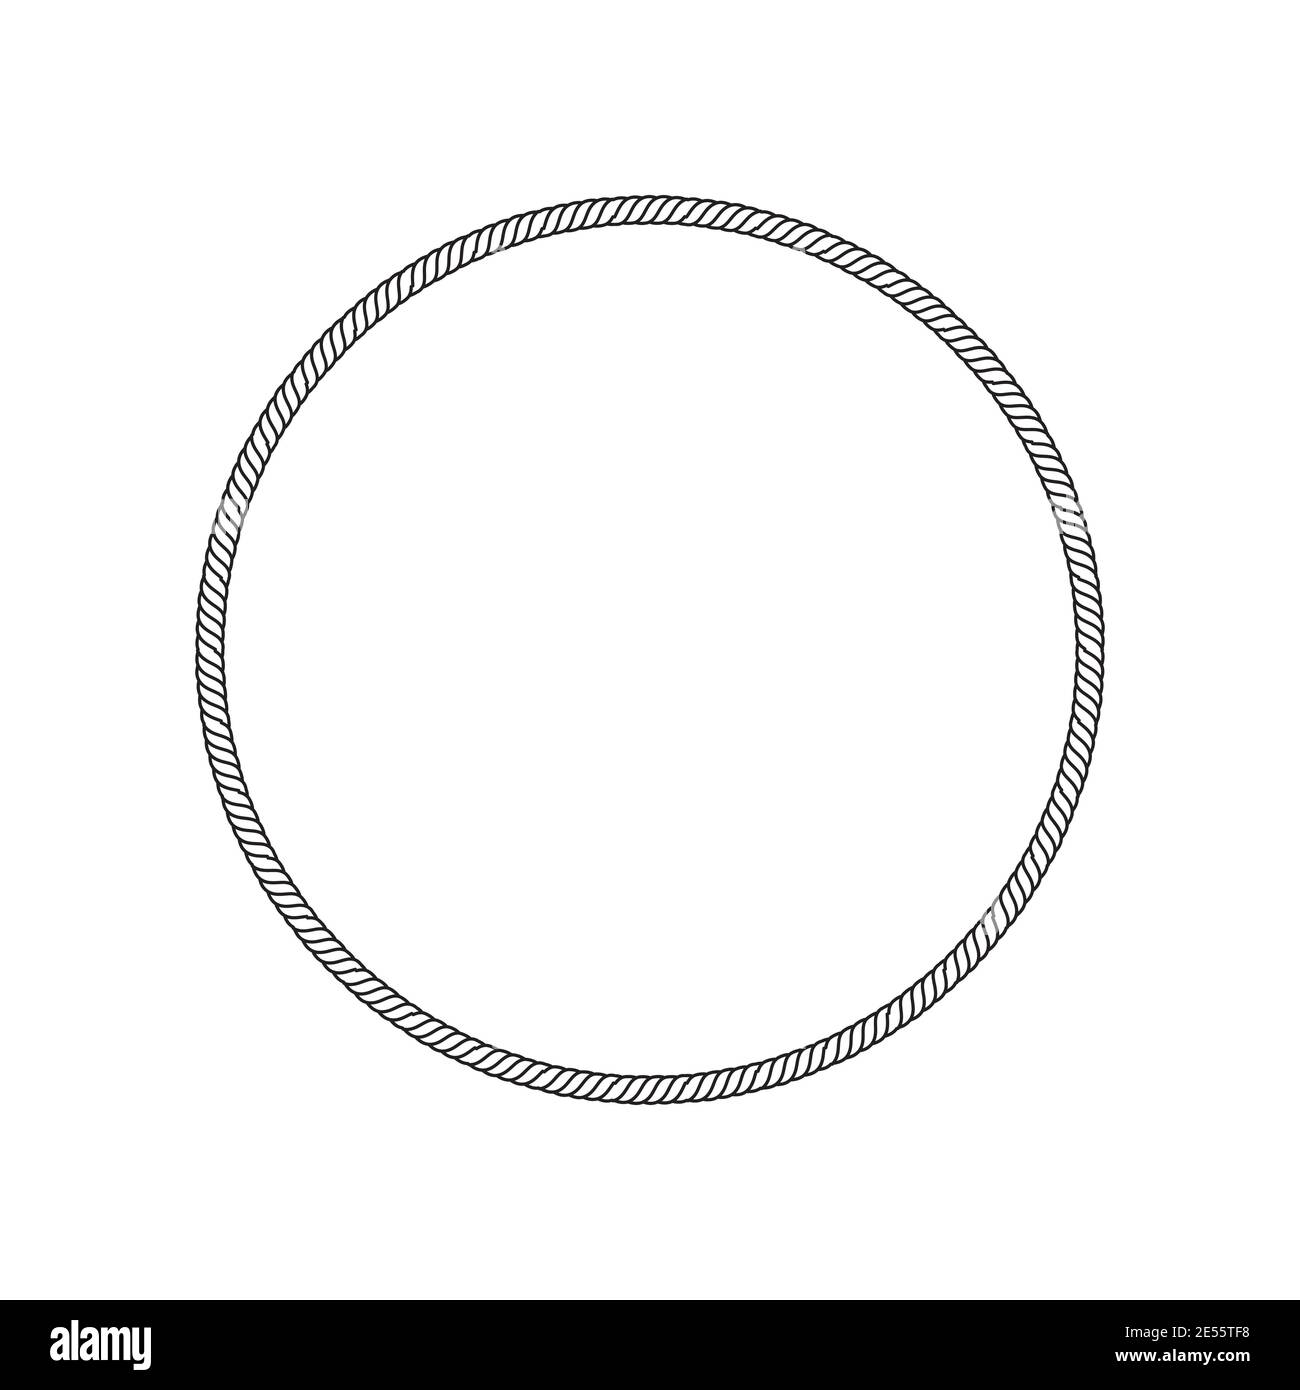 rope circle design vector illustration on white background Stock